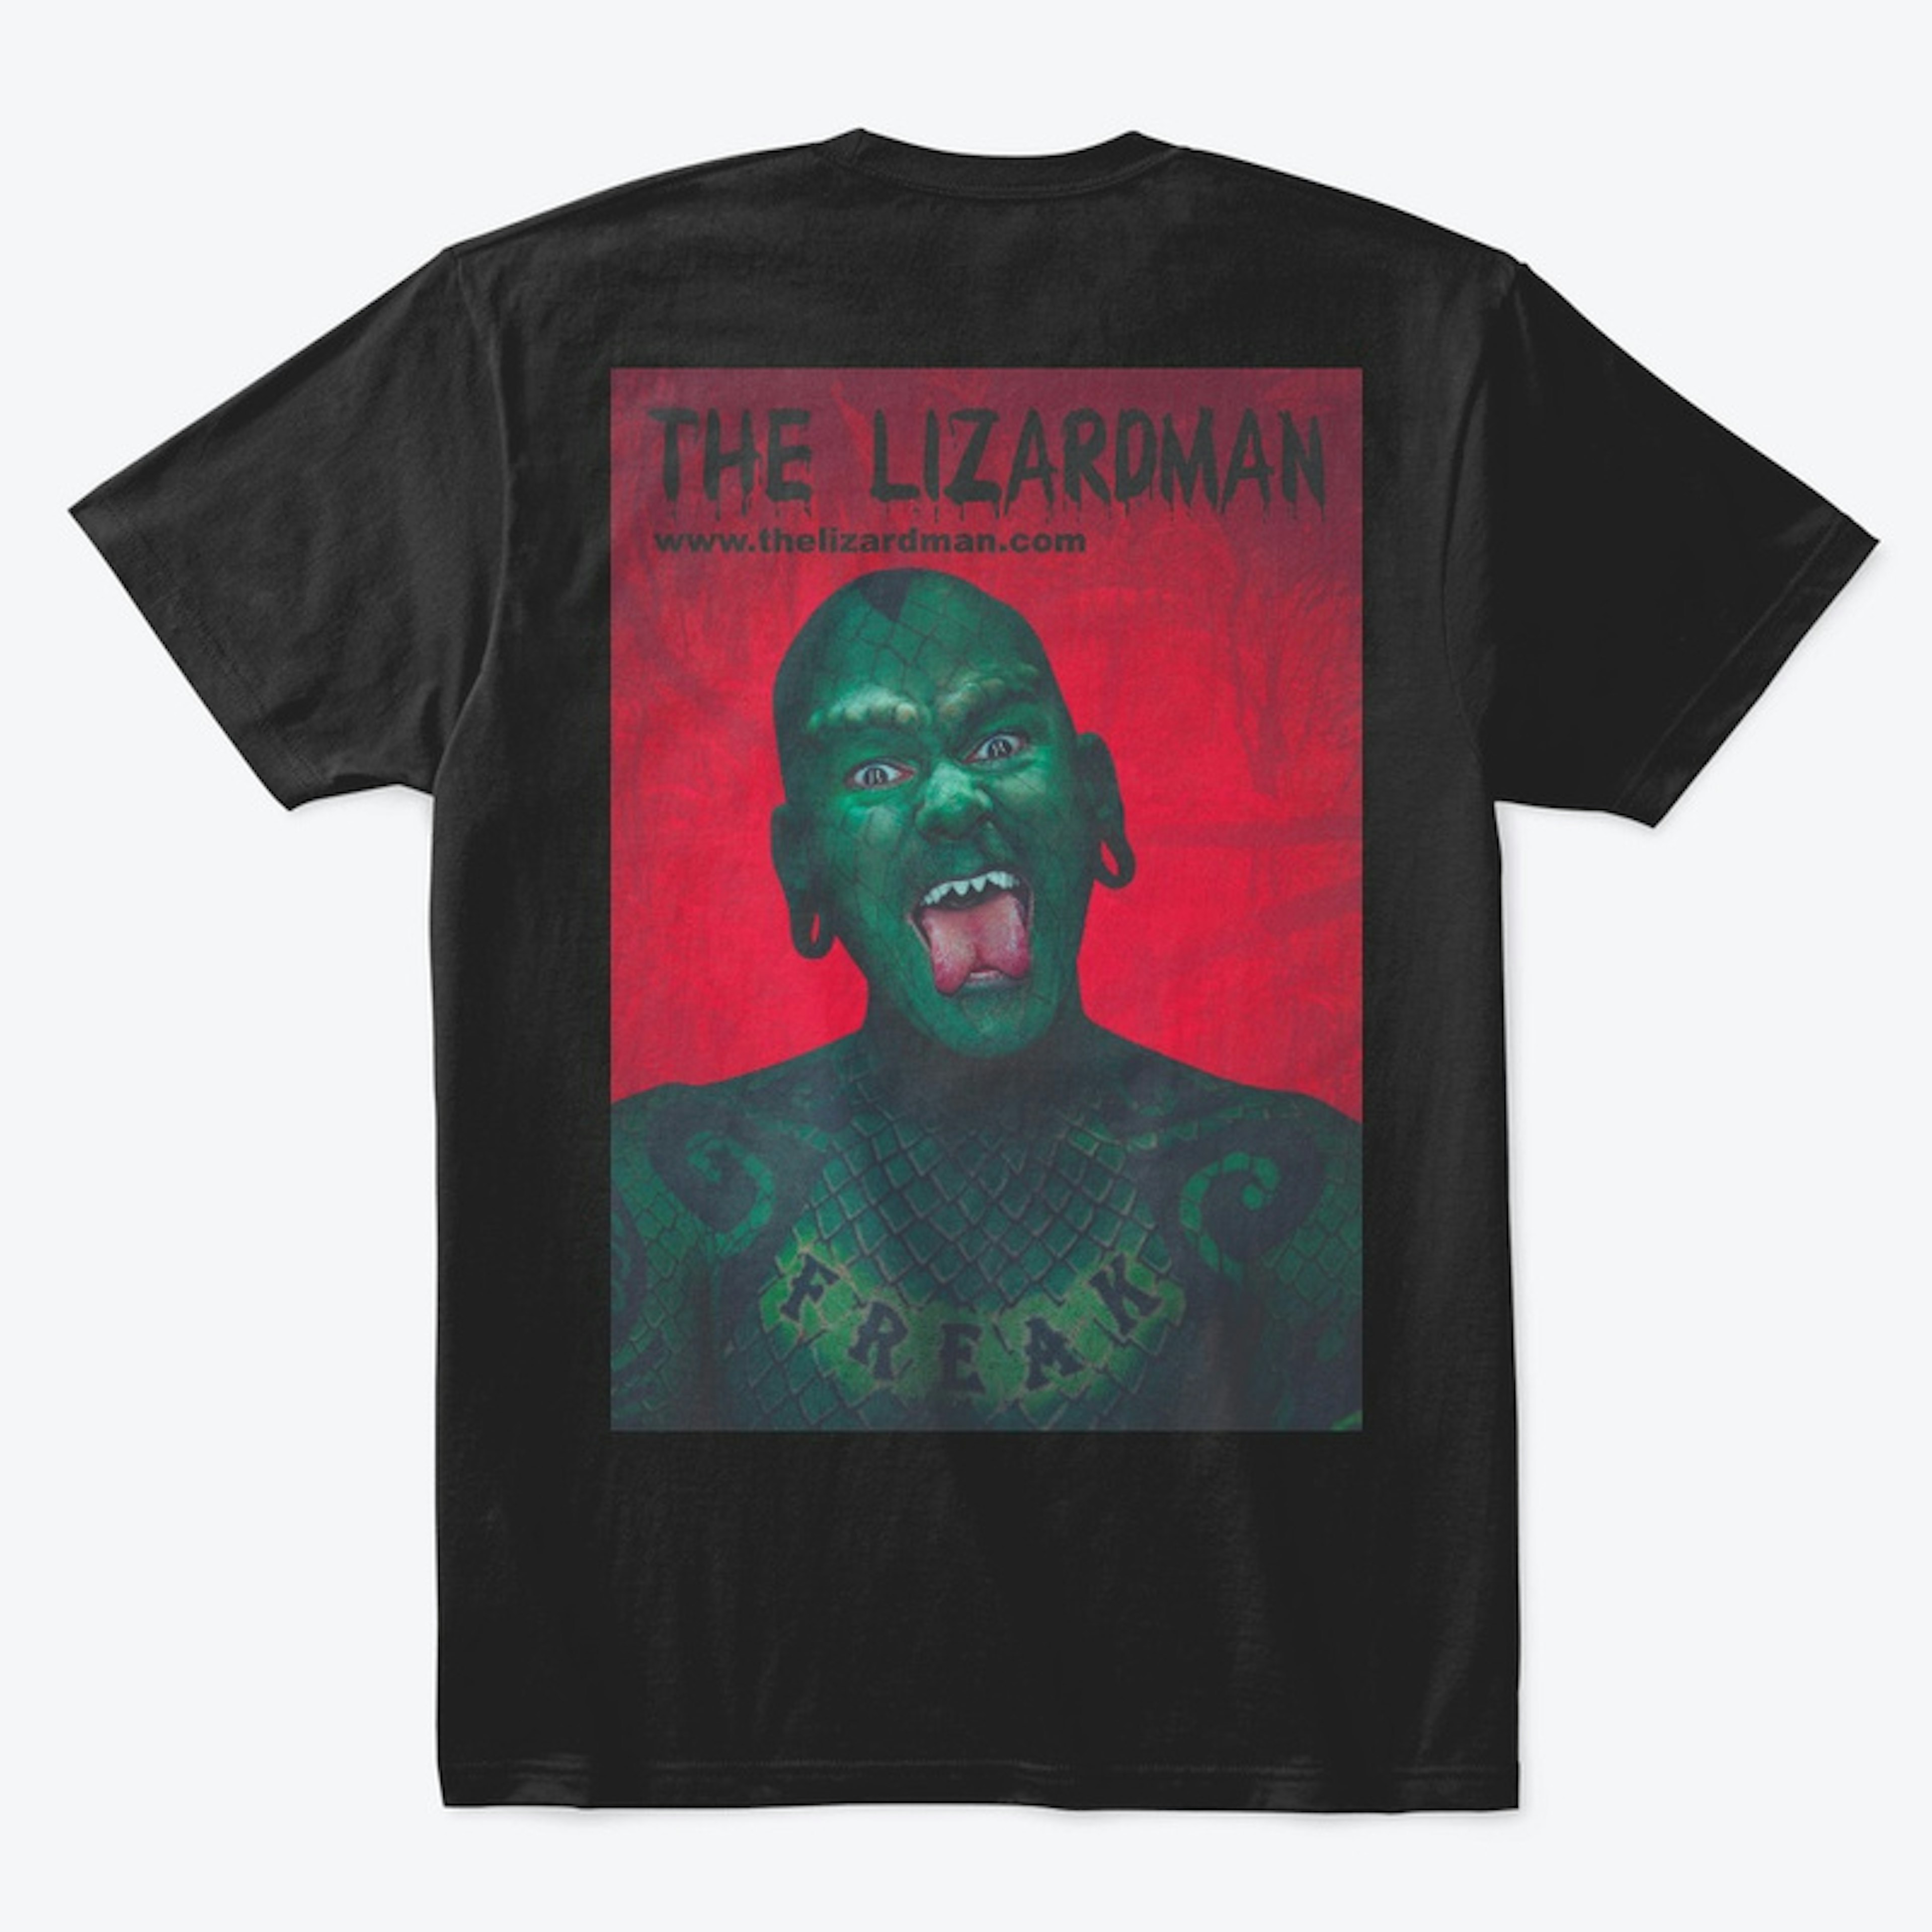 The Lizardman (back)